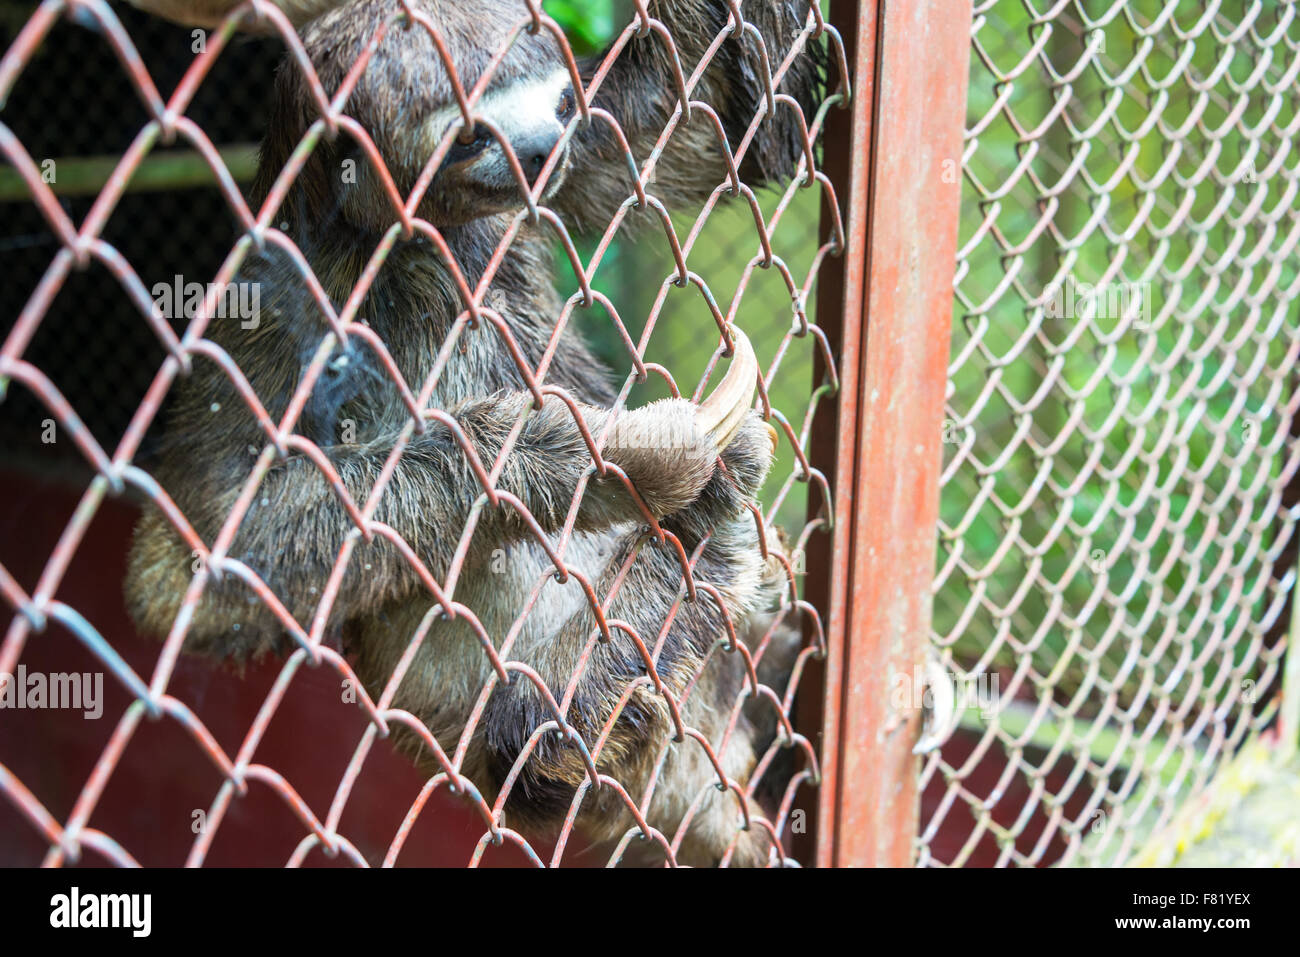 Vista de un perezoso de tres dedos cada en una jaula cerca de Iquitos, Perú Foto de stock